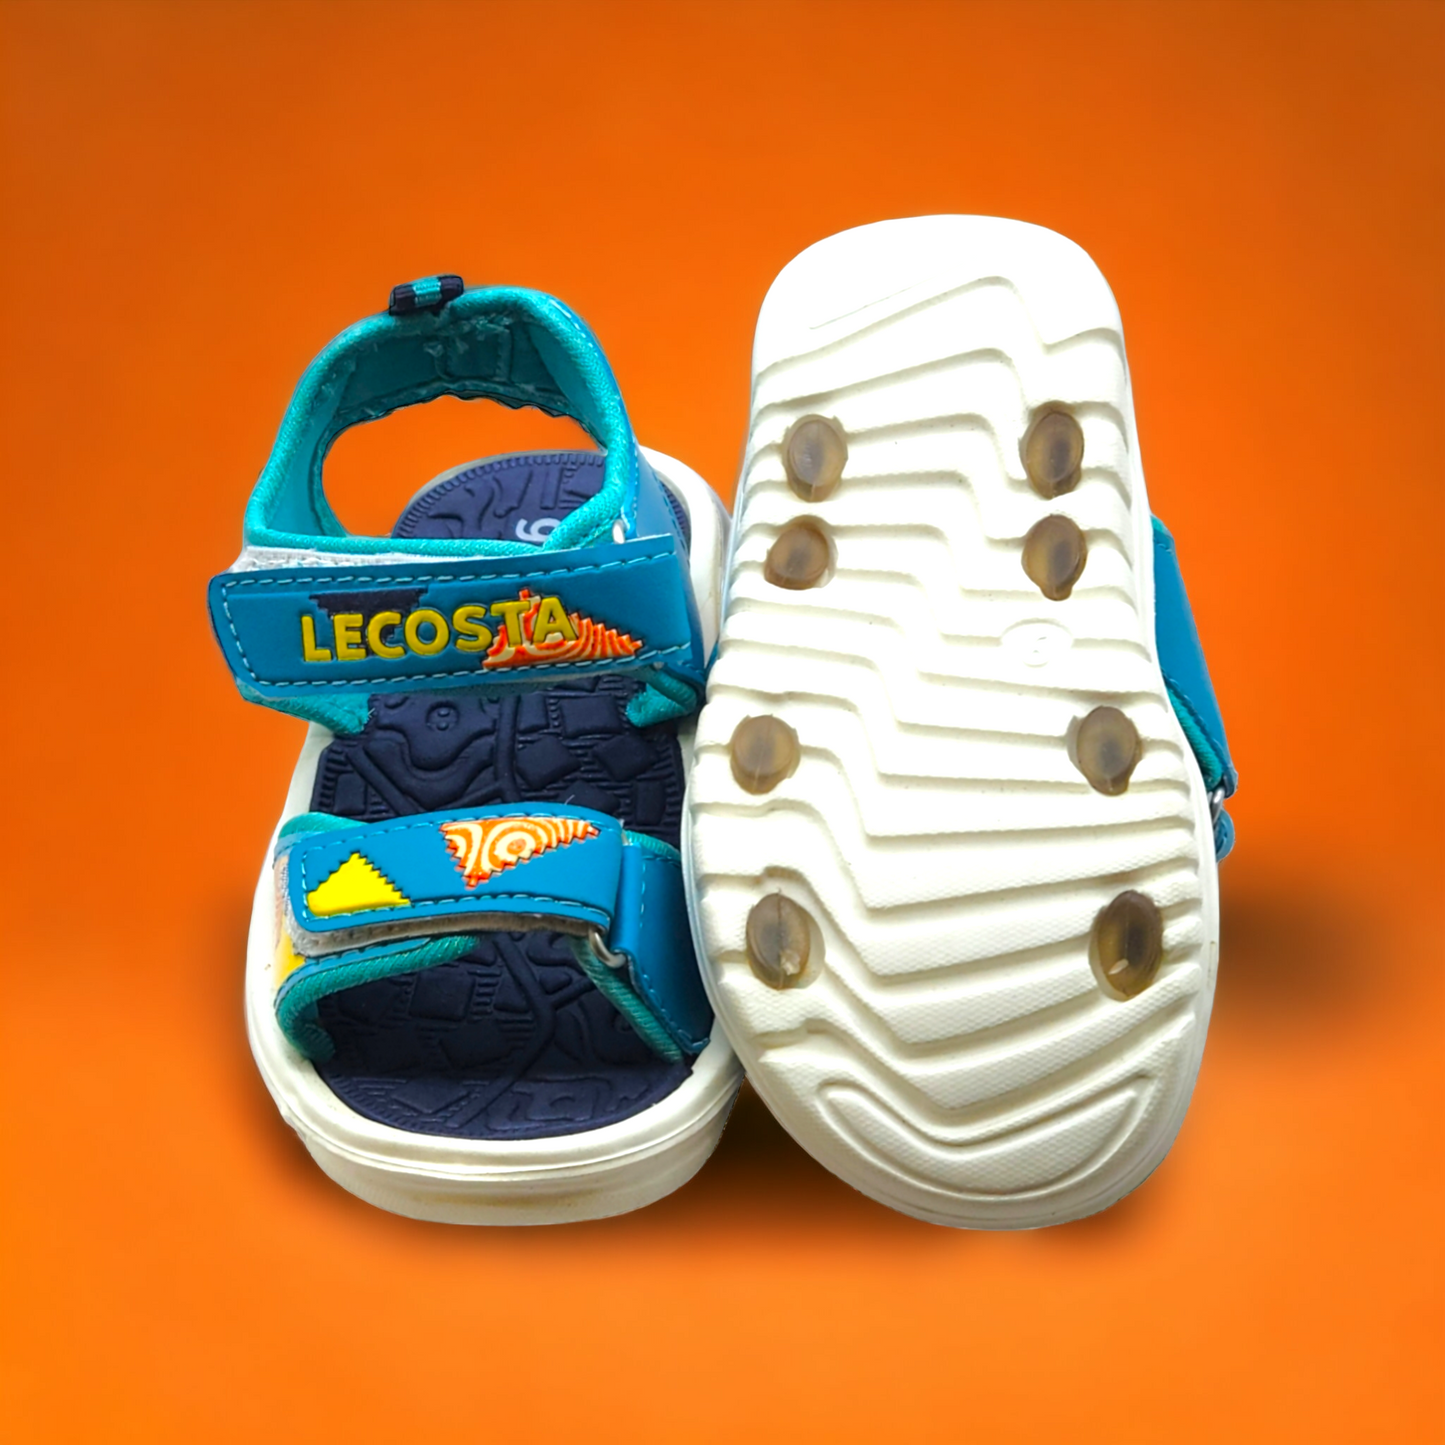 Lecosta Lagoon: Dive into Adventure with Sea Green Kids' Sandals!